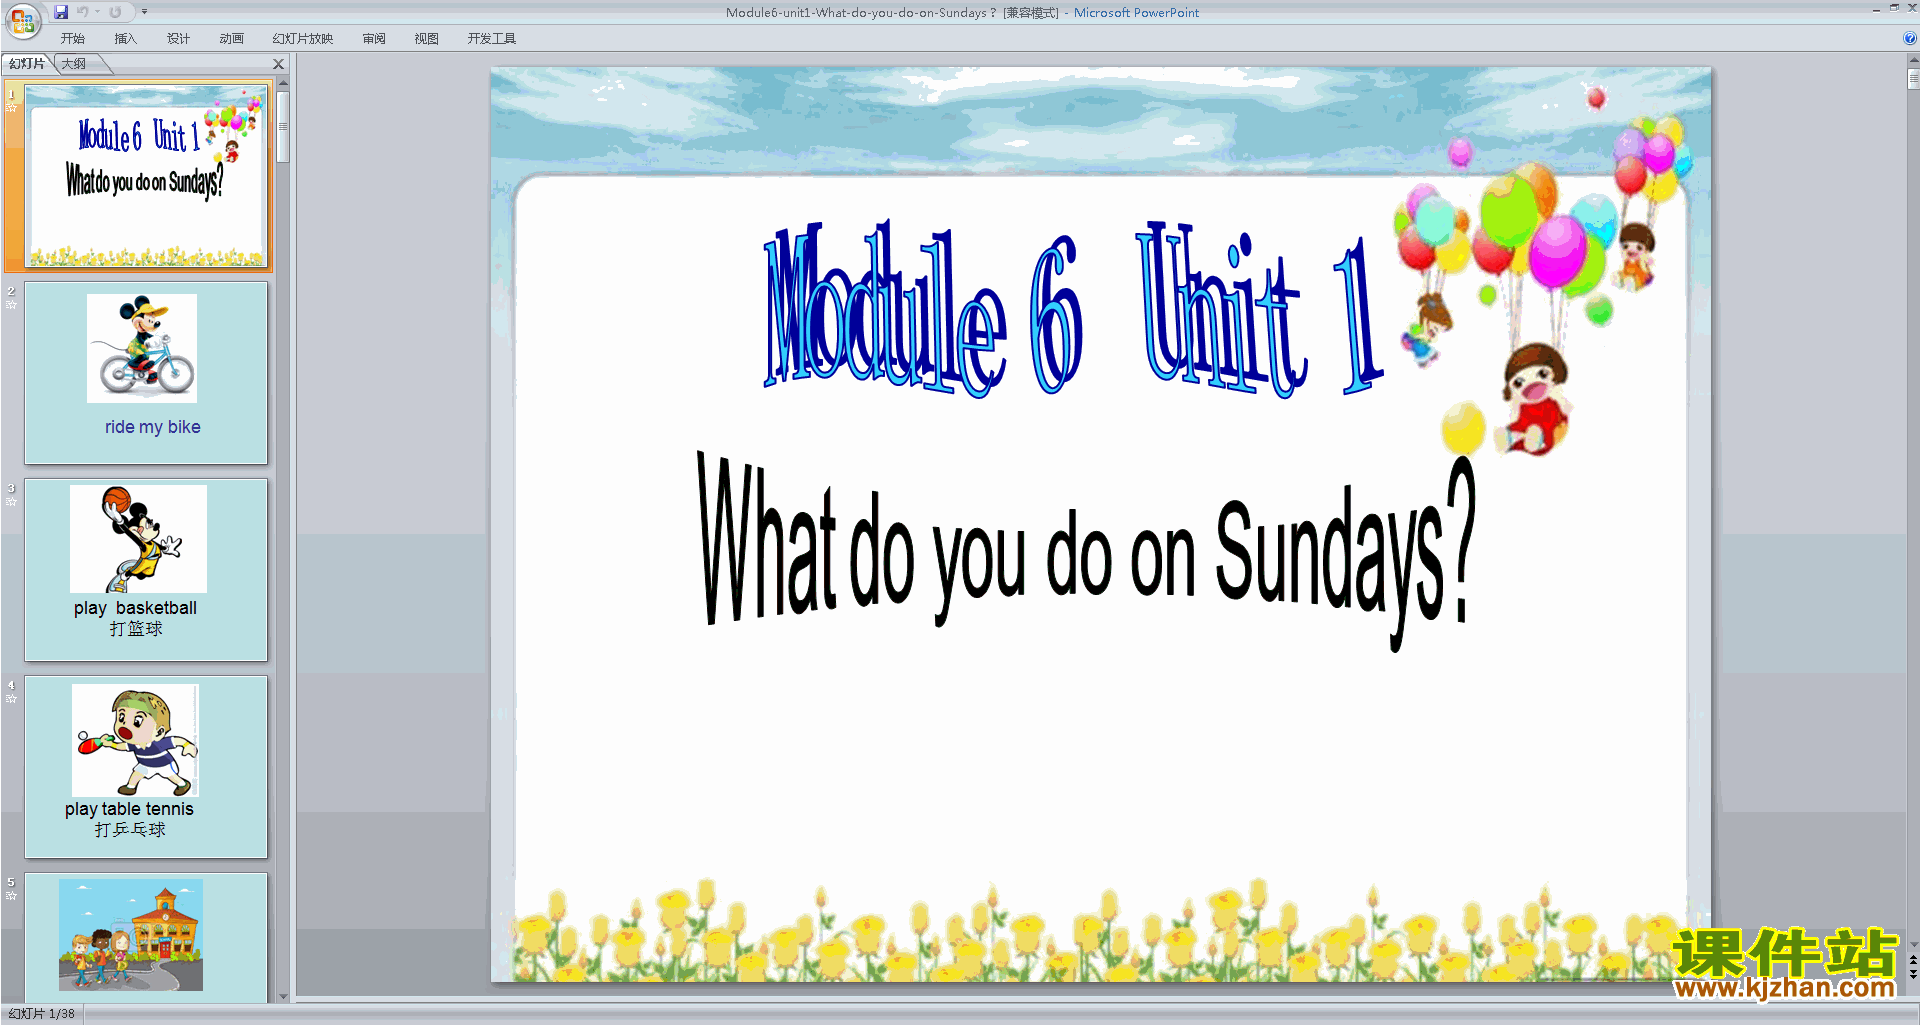 Module6 Unit1 What do you do on Sundayspptμ